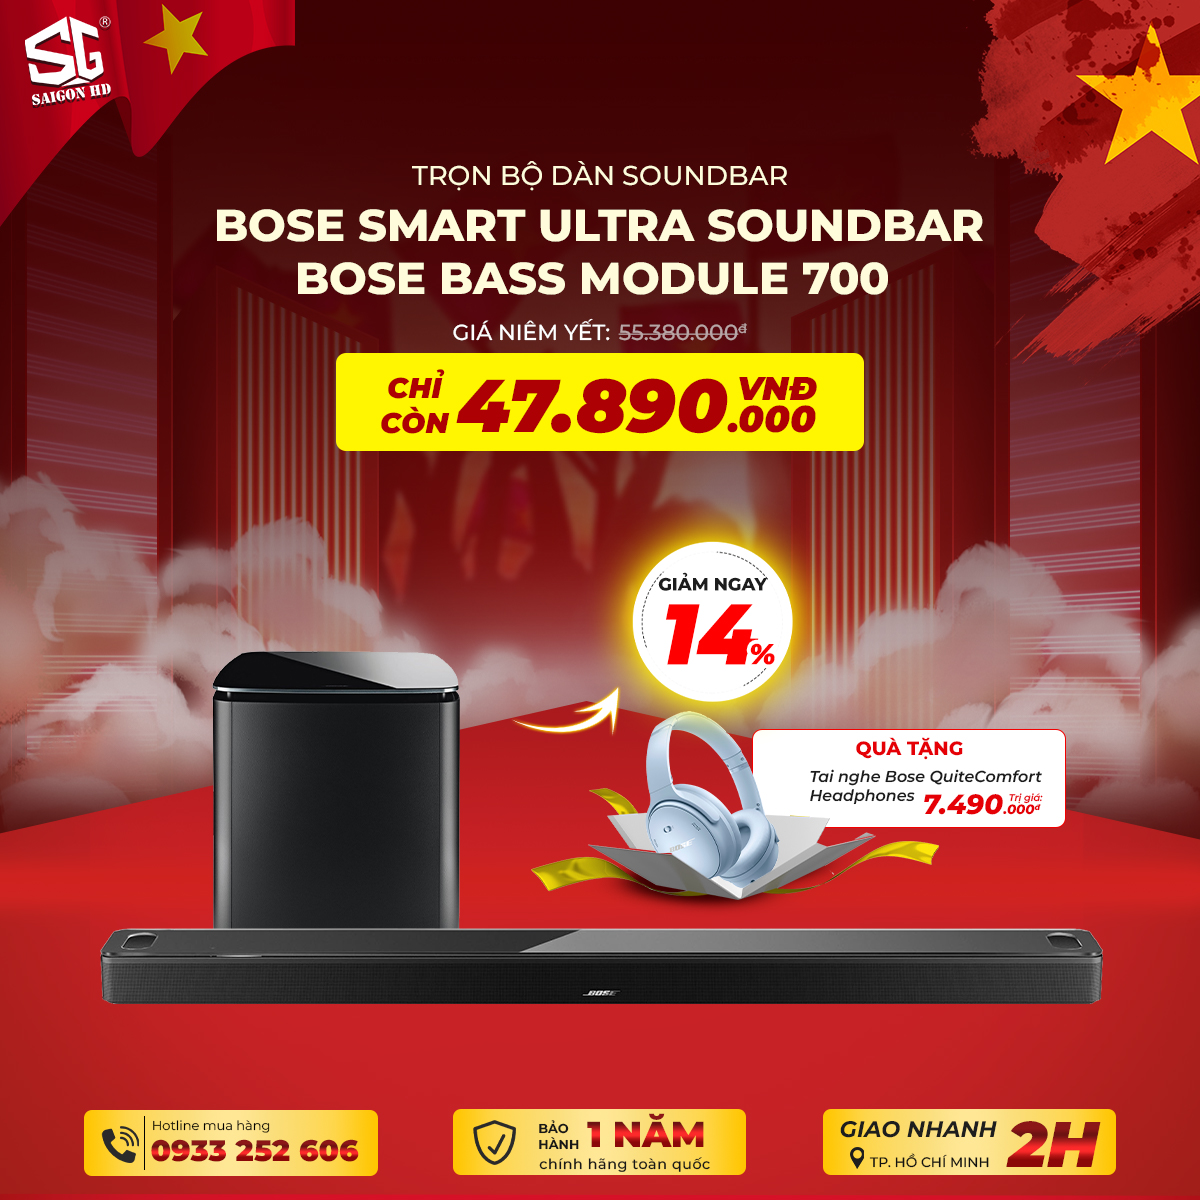 Dàn soundbar Bose Smart Ultra Soundbar - Bose Bass Module 700